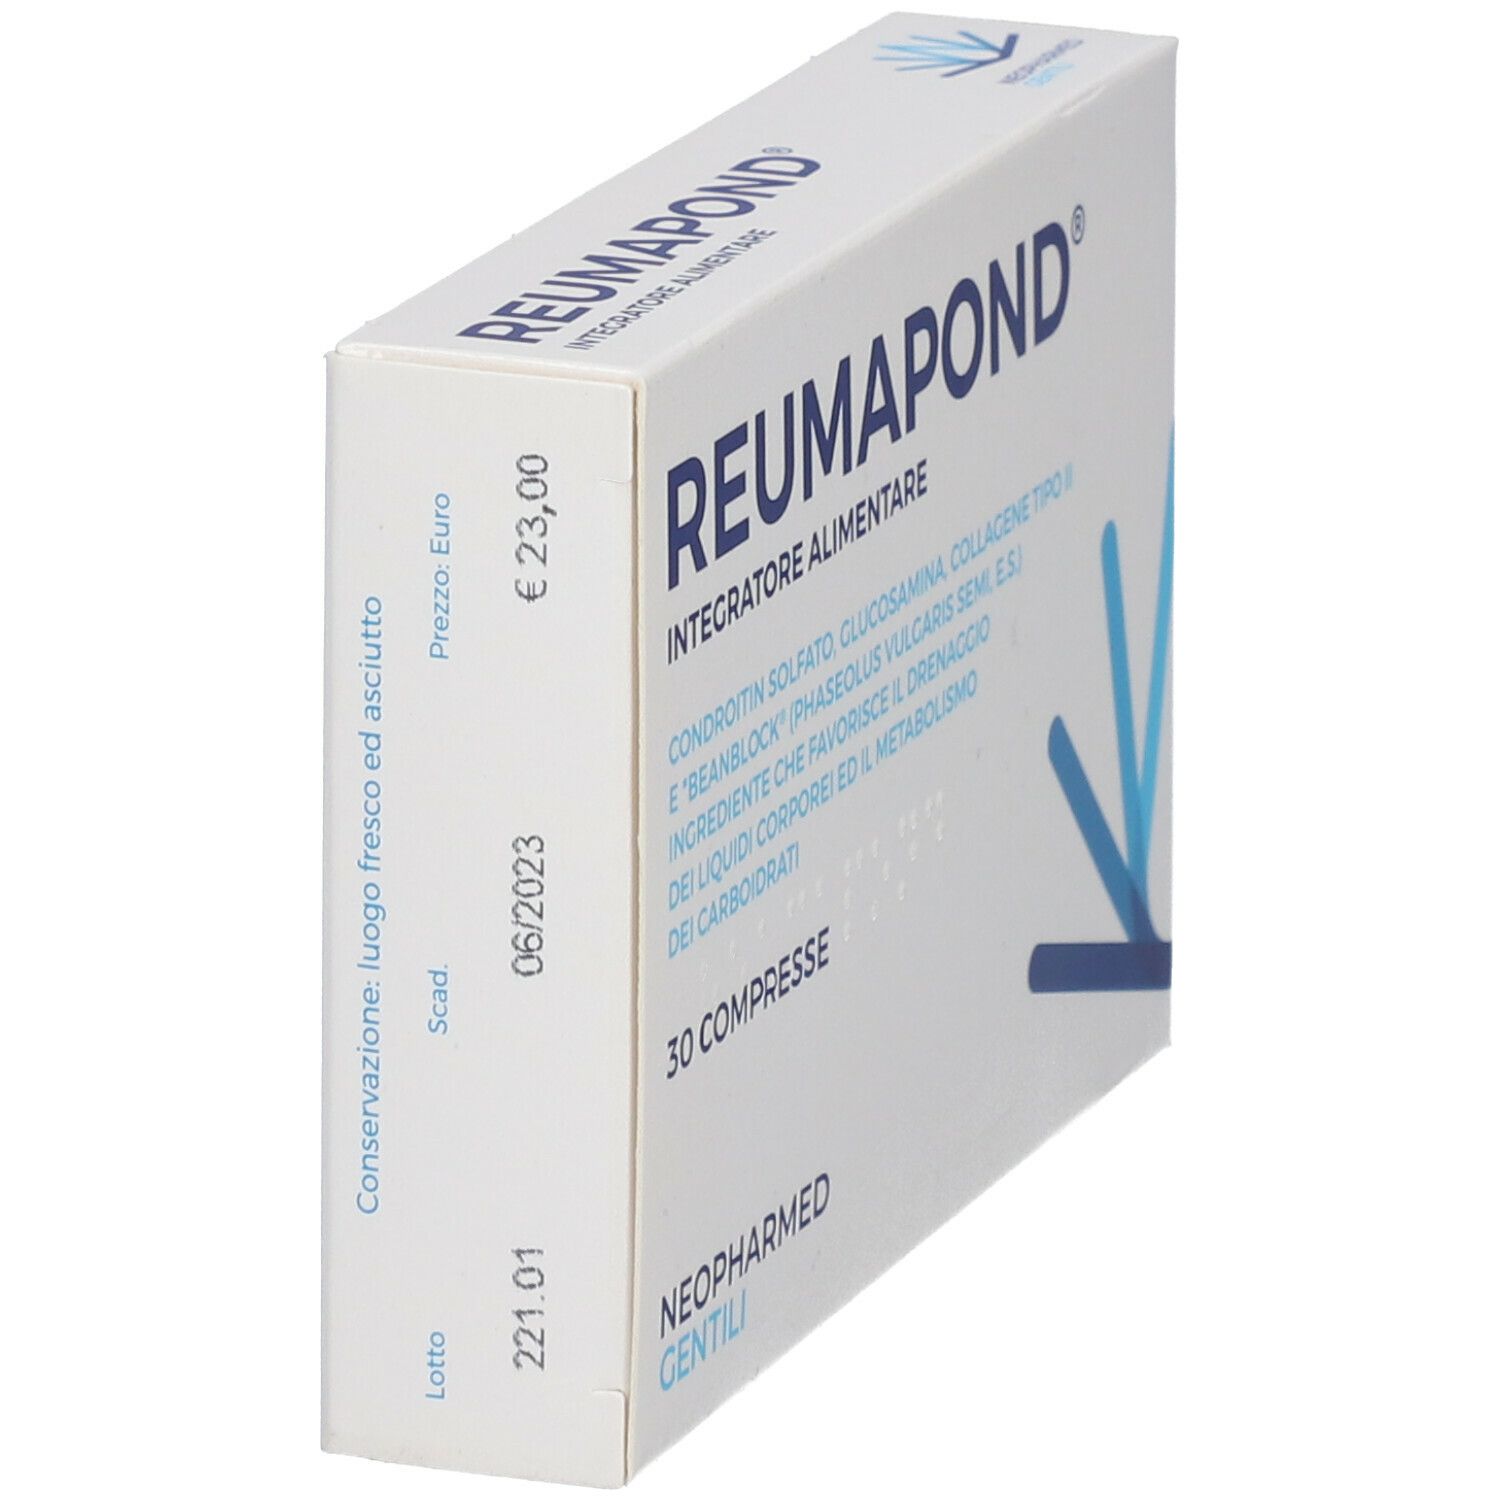 Reumapond®